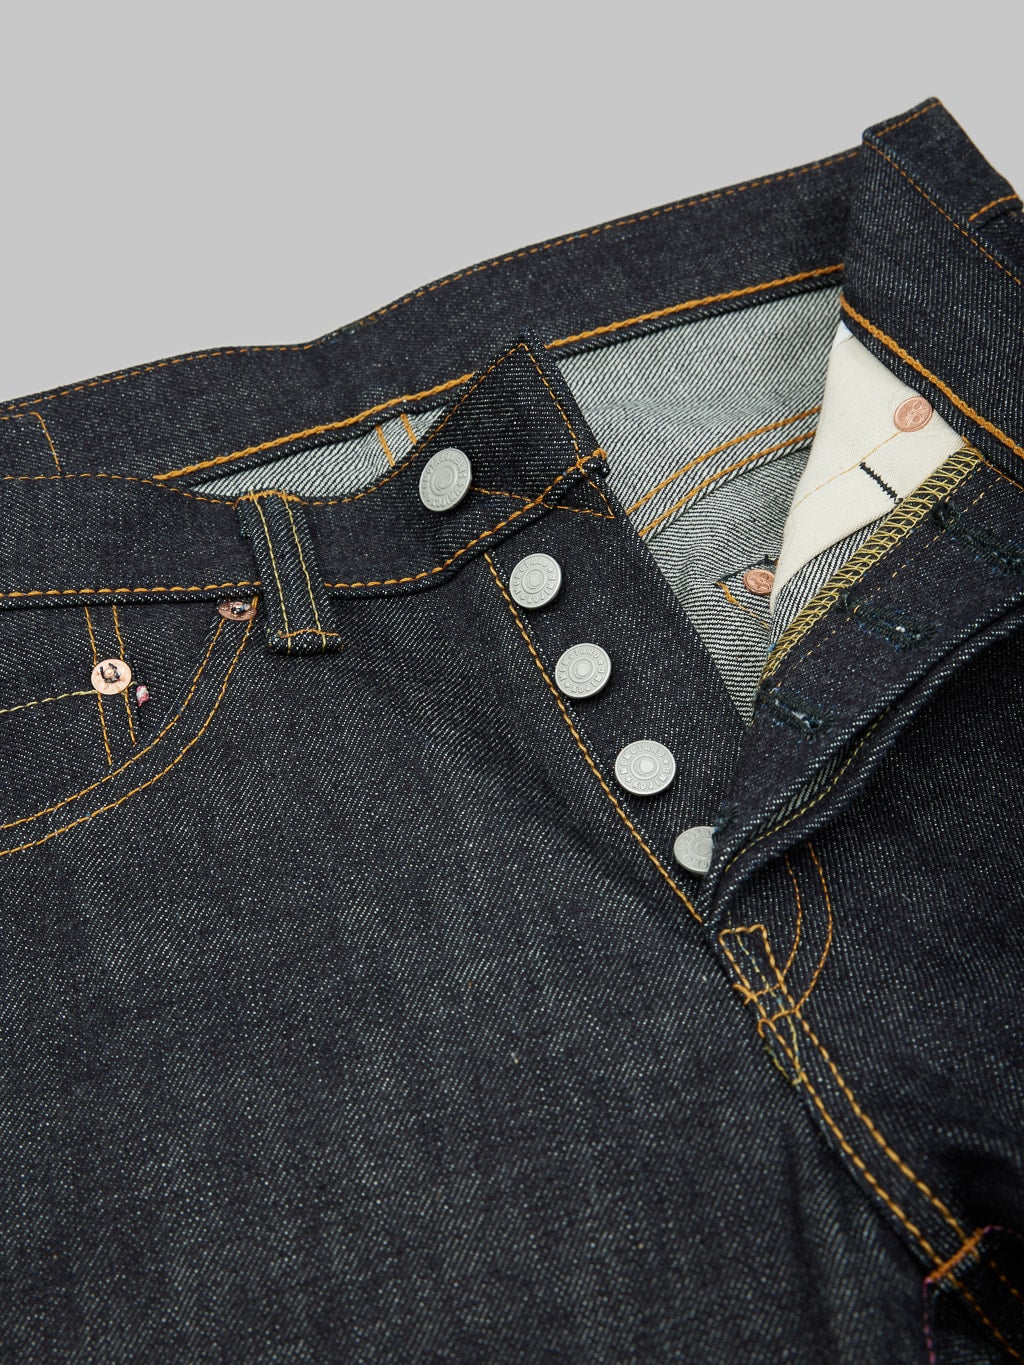 momotaro jeans 0405 v selvedge denim high tapered iron buttons